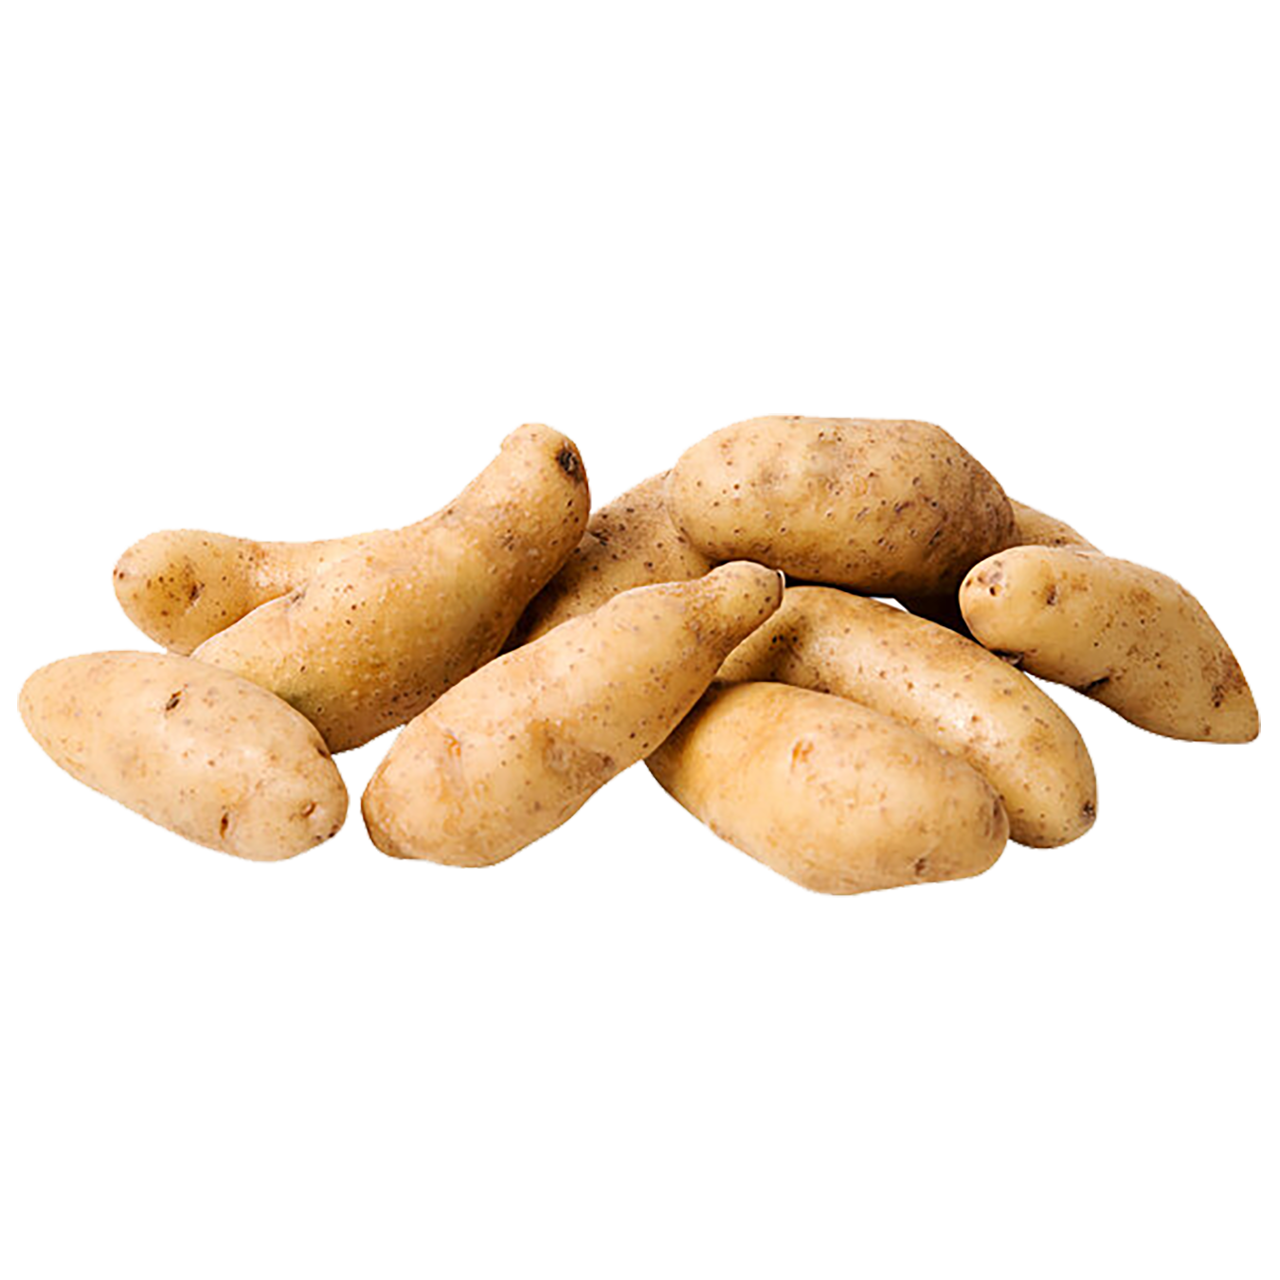 Fingerling Potatoes - Organic